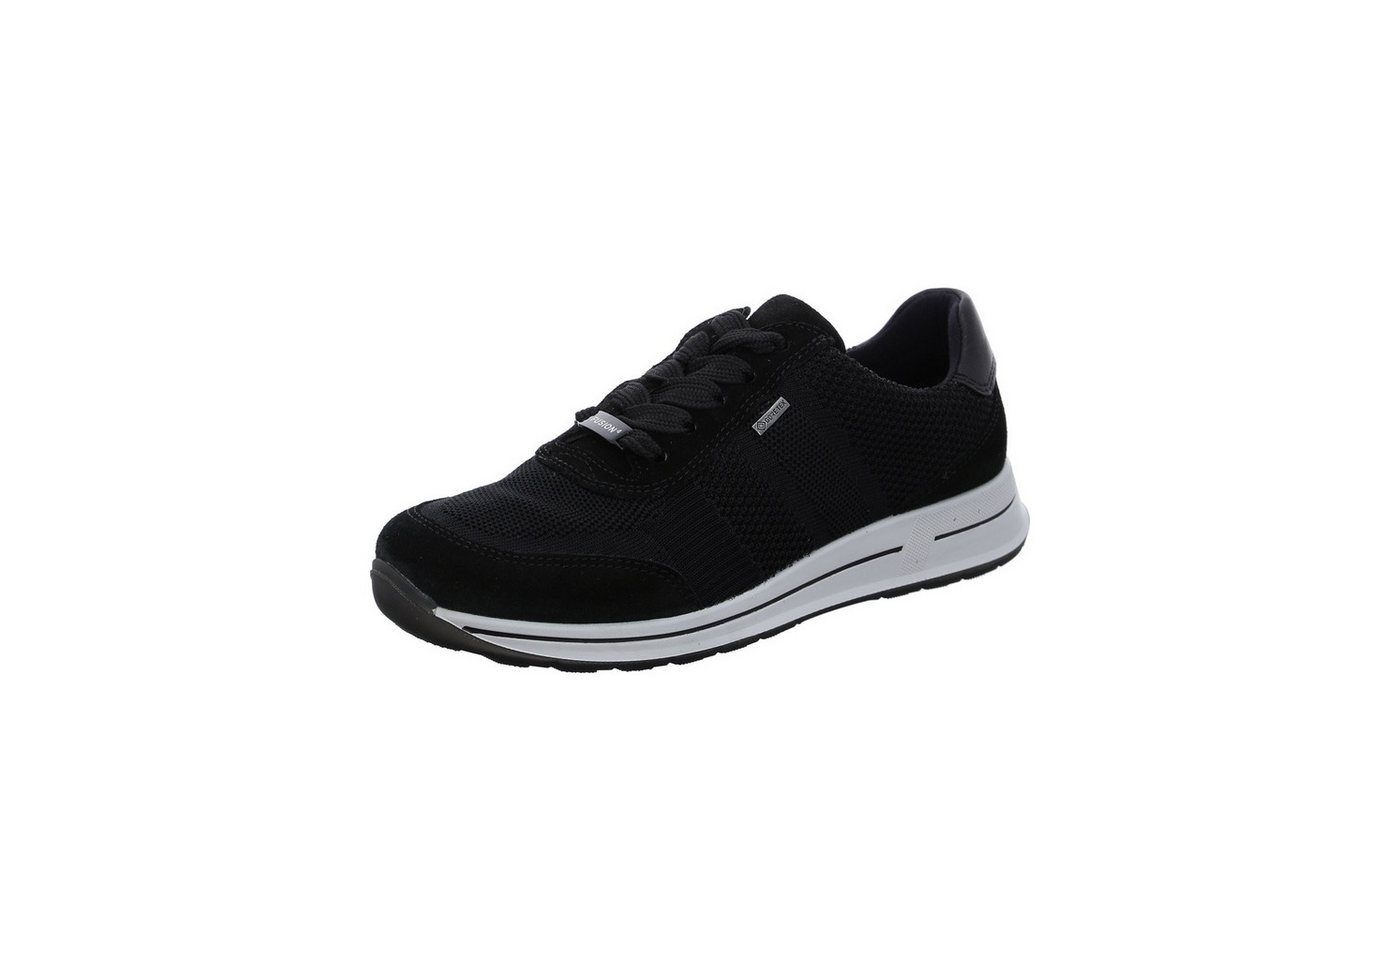 Ara Osaka - Damen Schuhe Schnürschuh Sneaker Textil schwarz von Ara